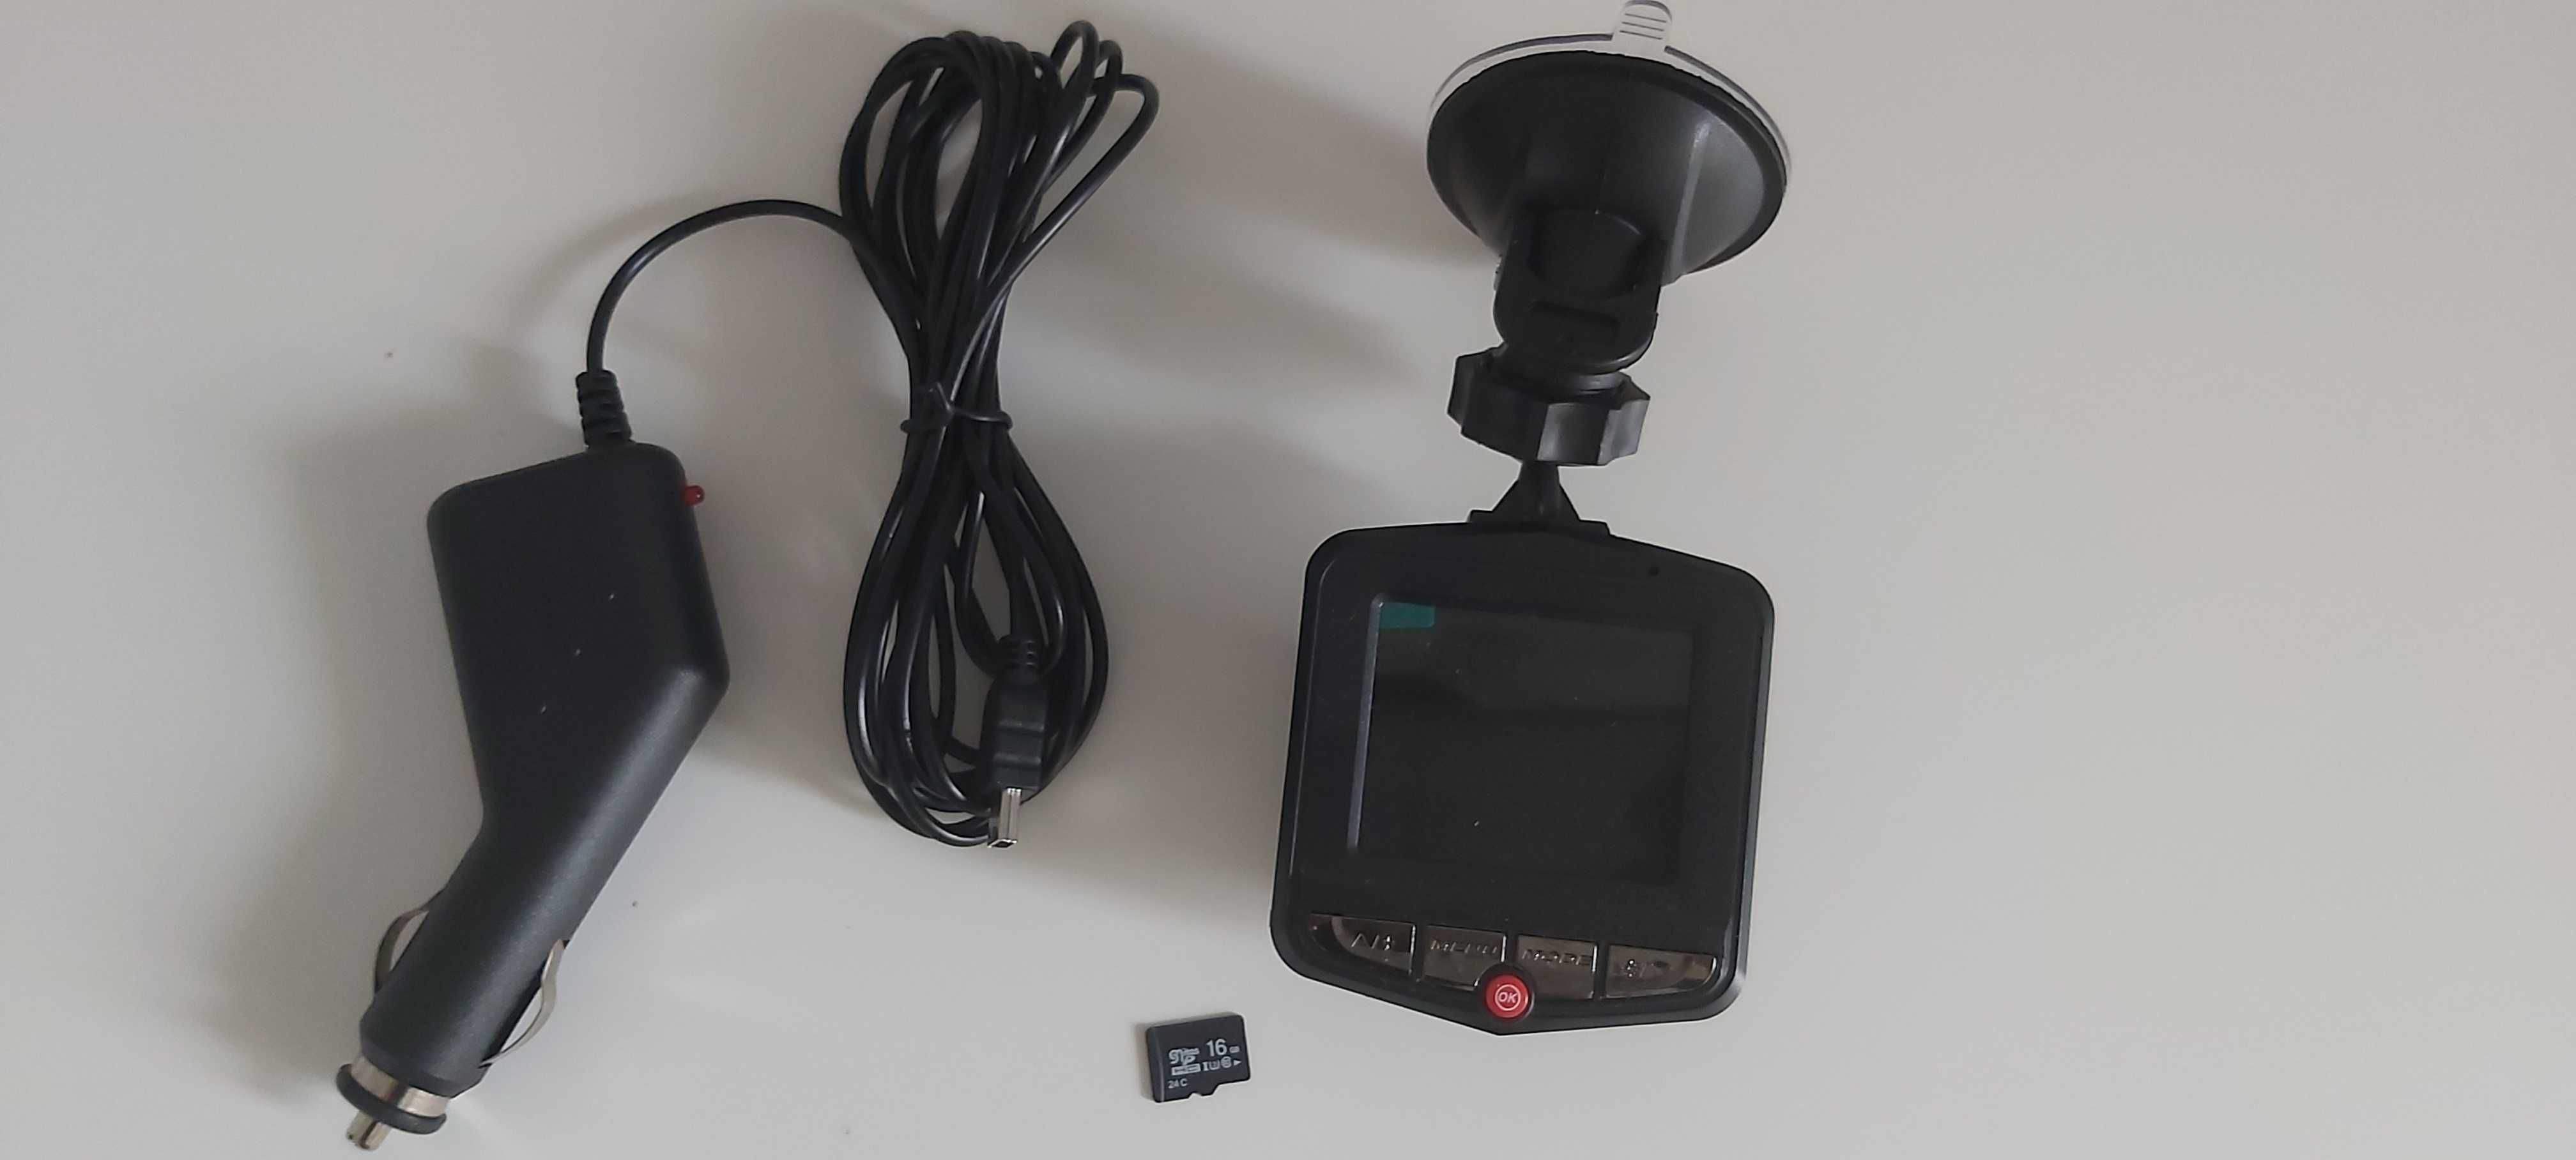 videorejestrator kamera samochodowa